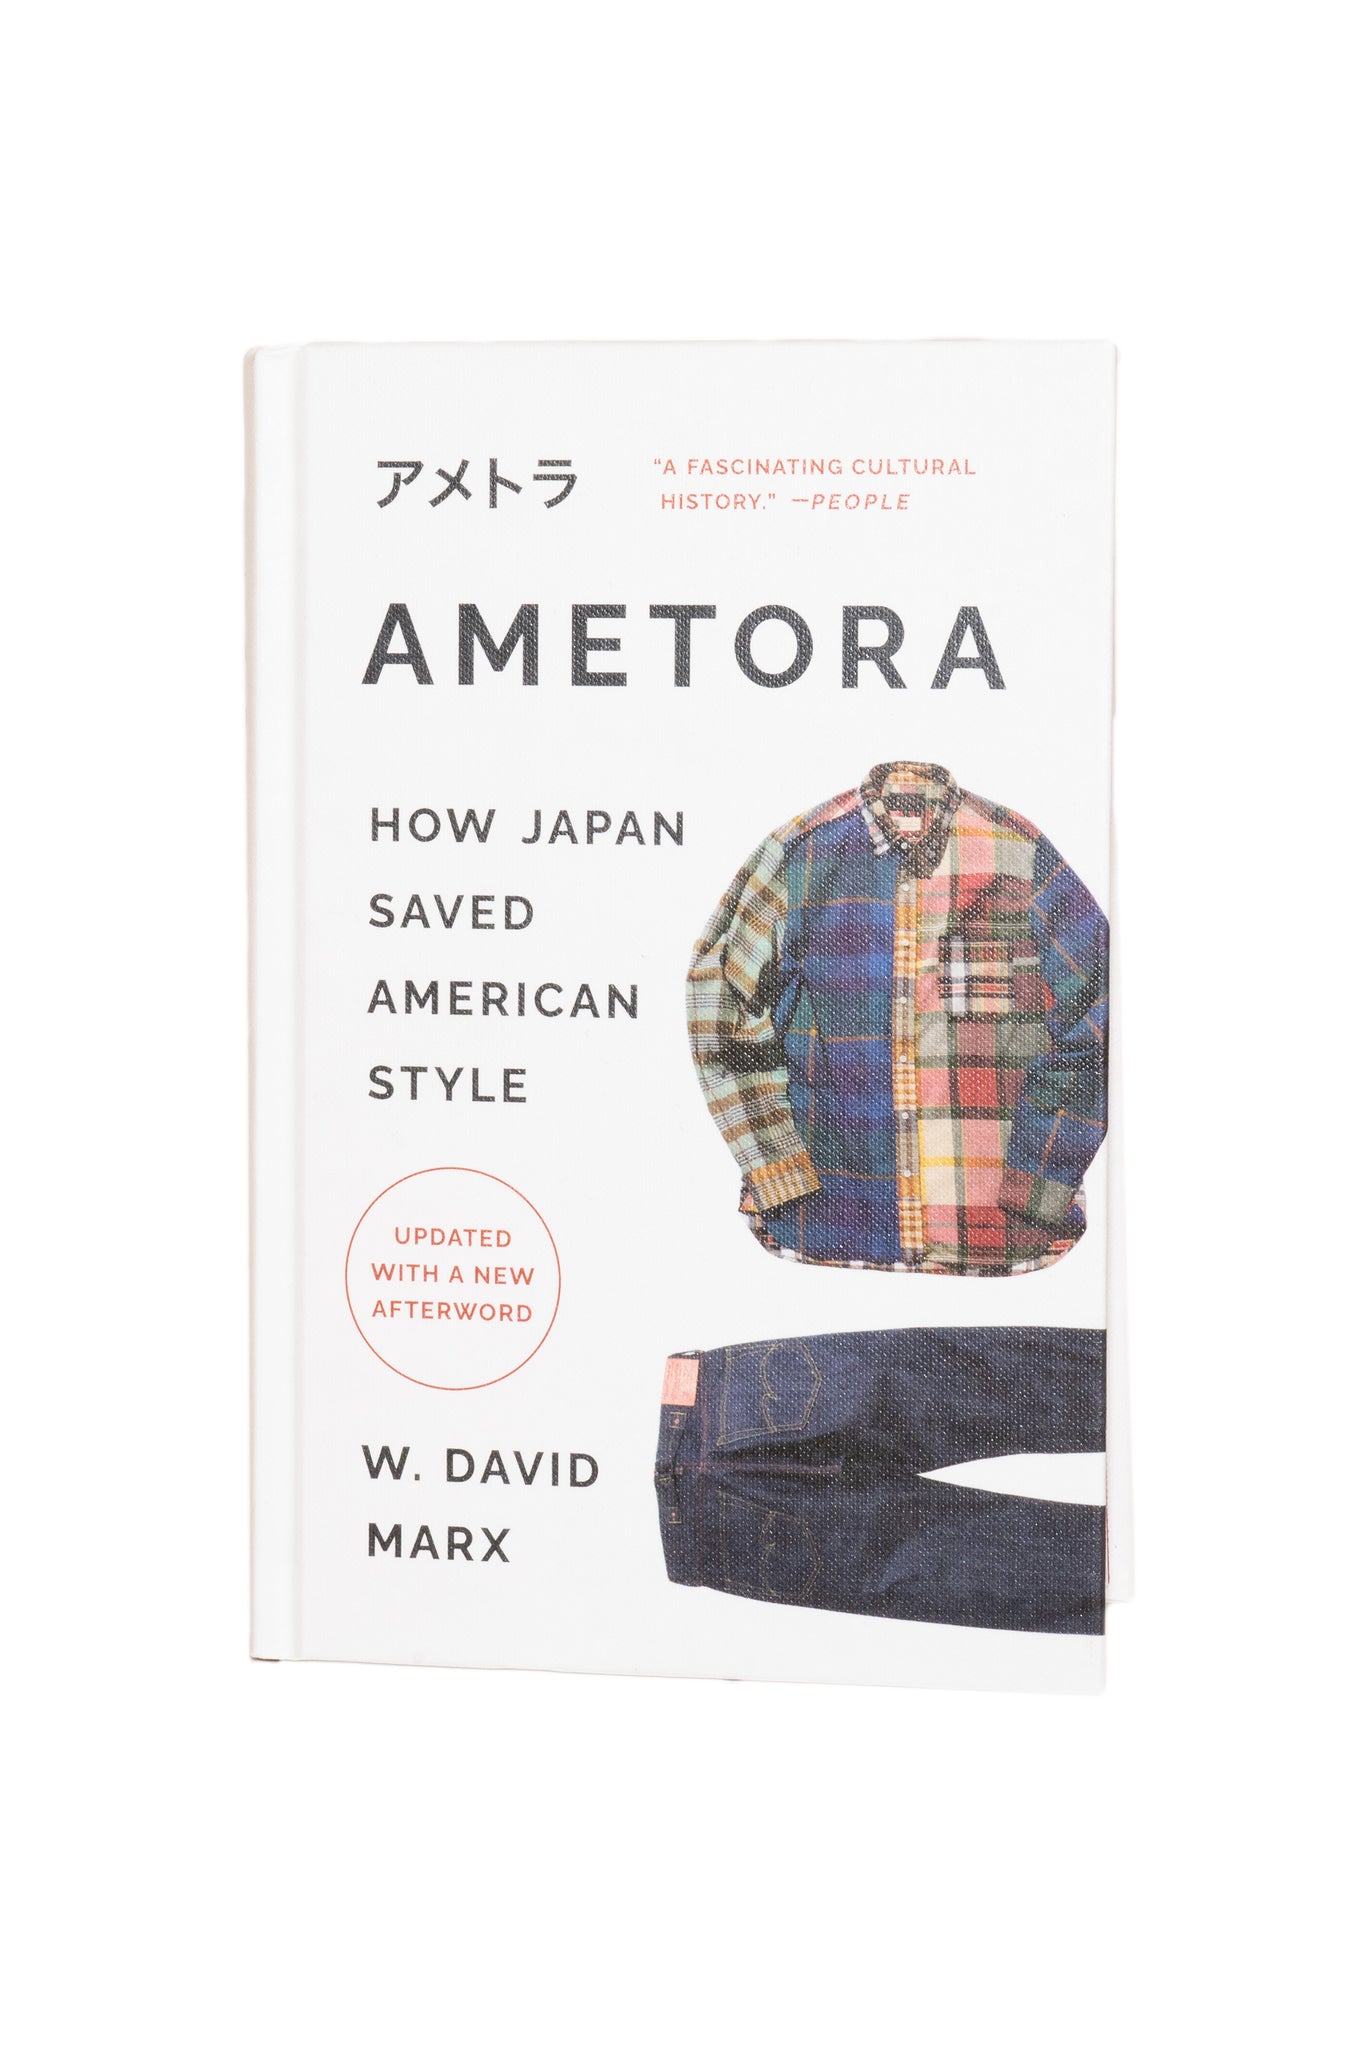 AMETORA: HOW JAPAN SAVED AMERICAN STYLE